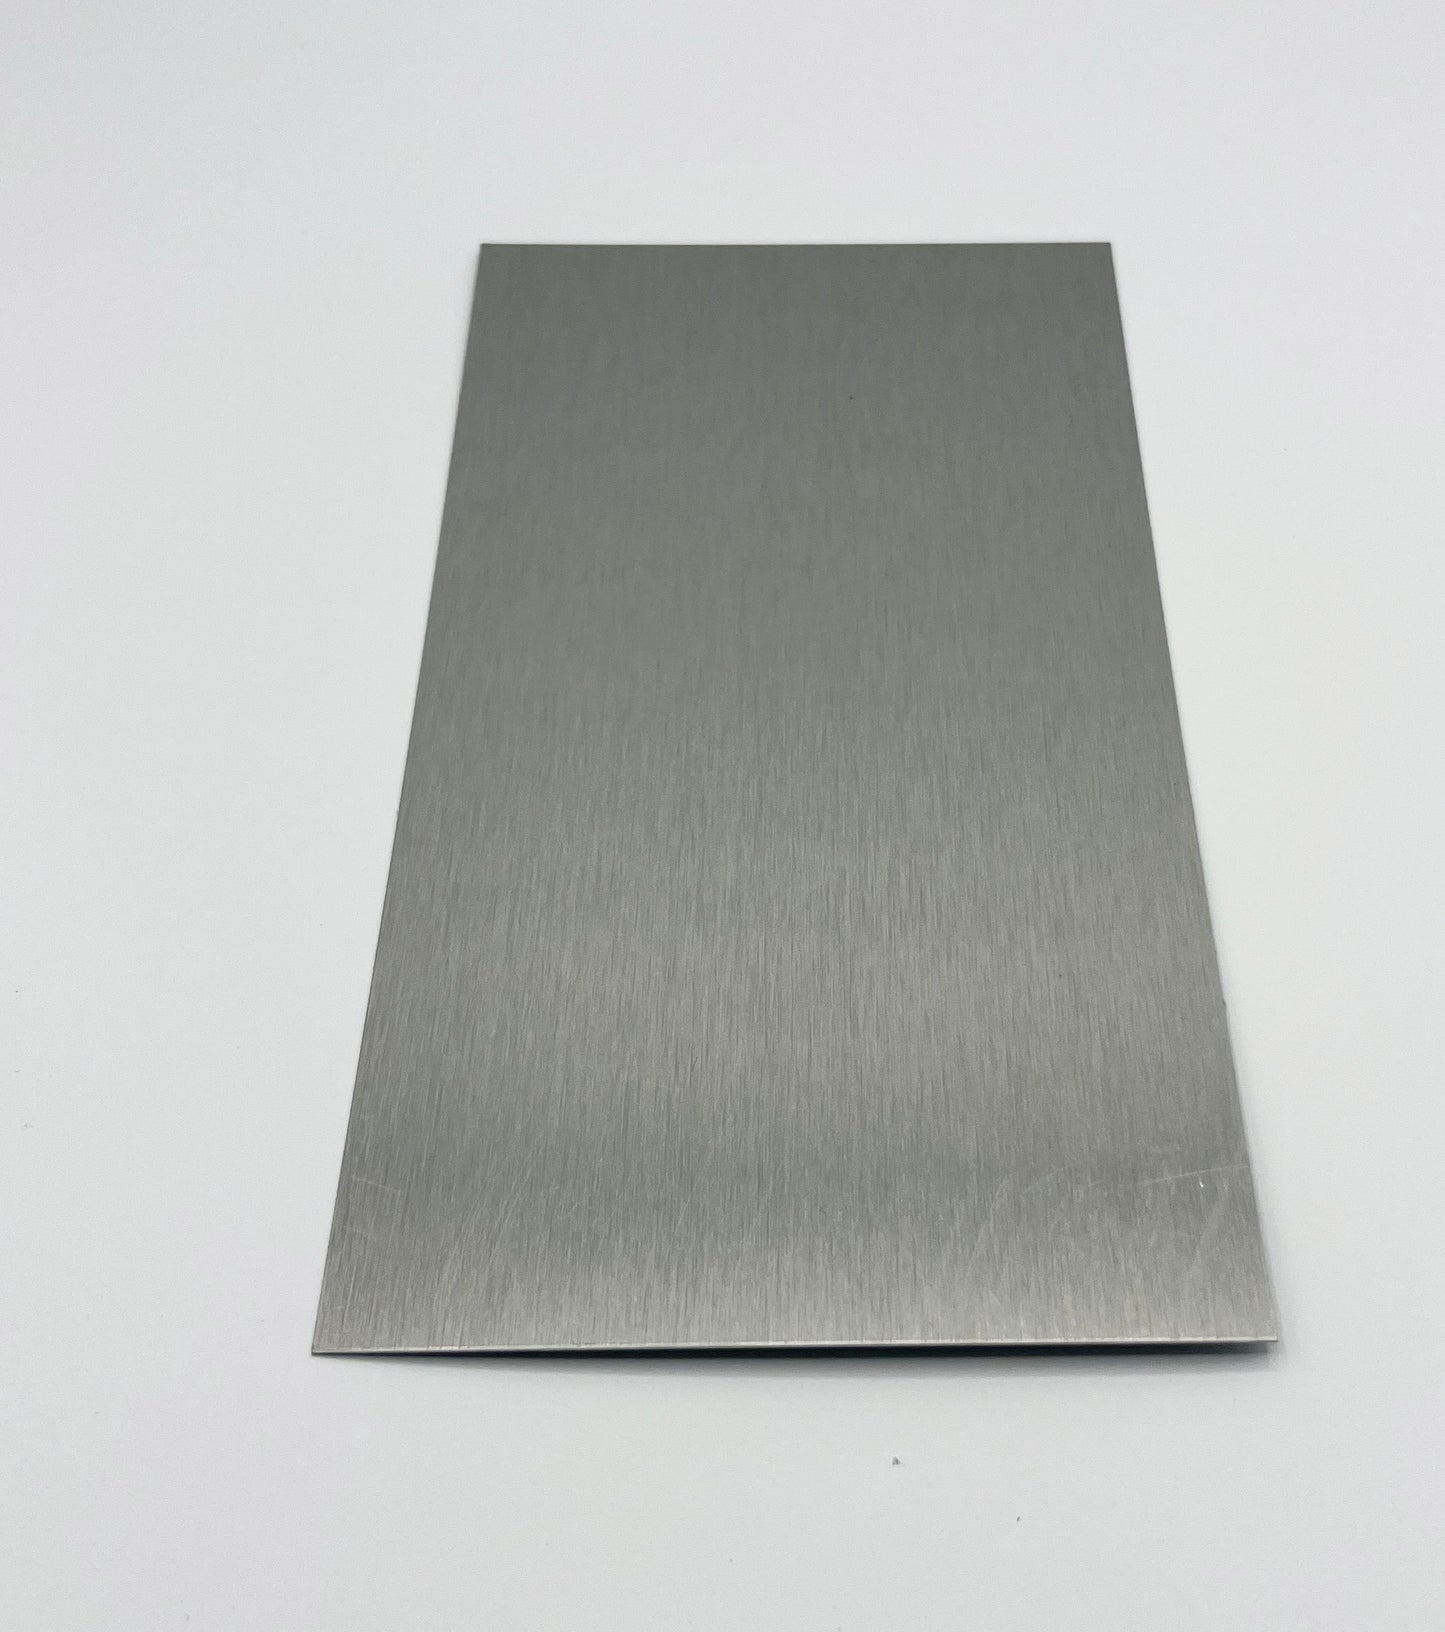 Aluminiumplatte 21 x 10,1 cm, Silber oder Weiß - Sublishop.net GmbH